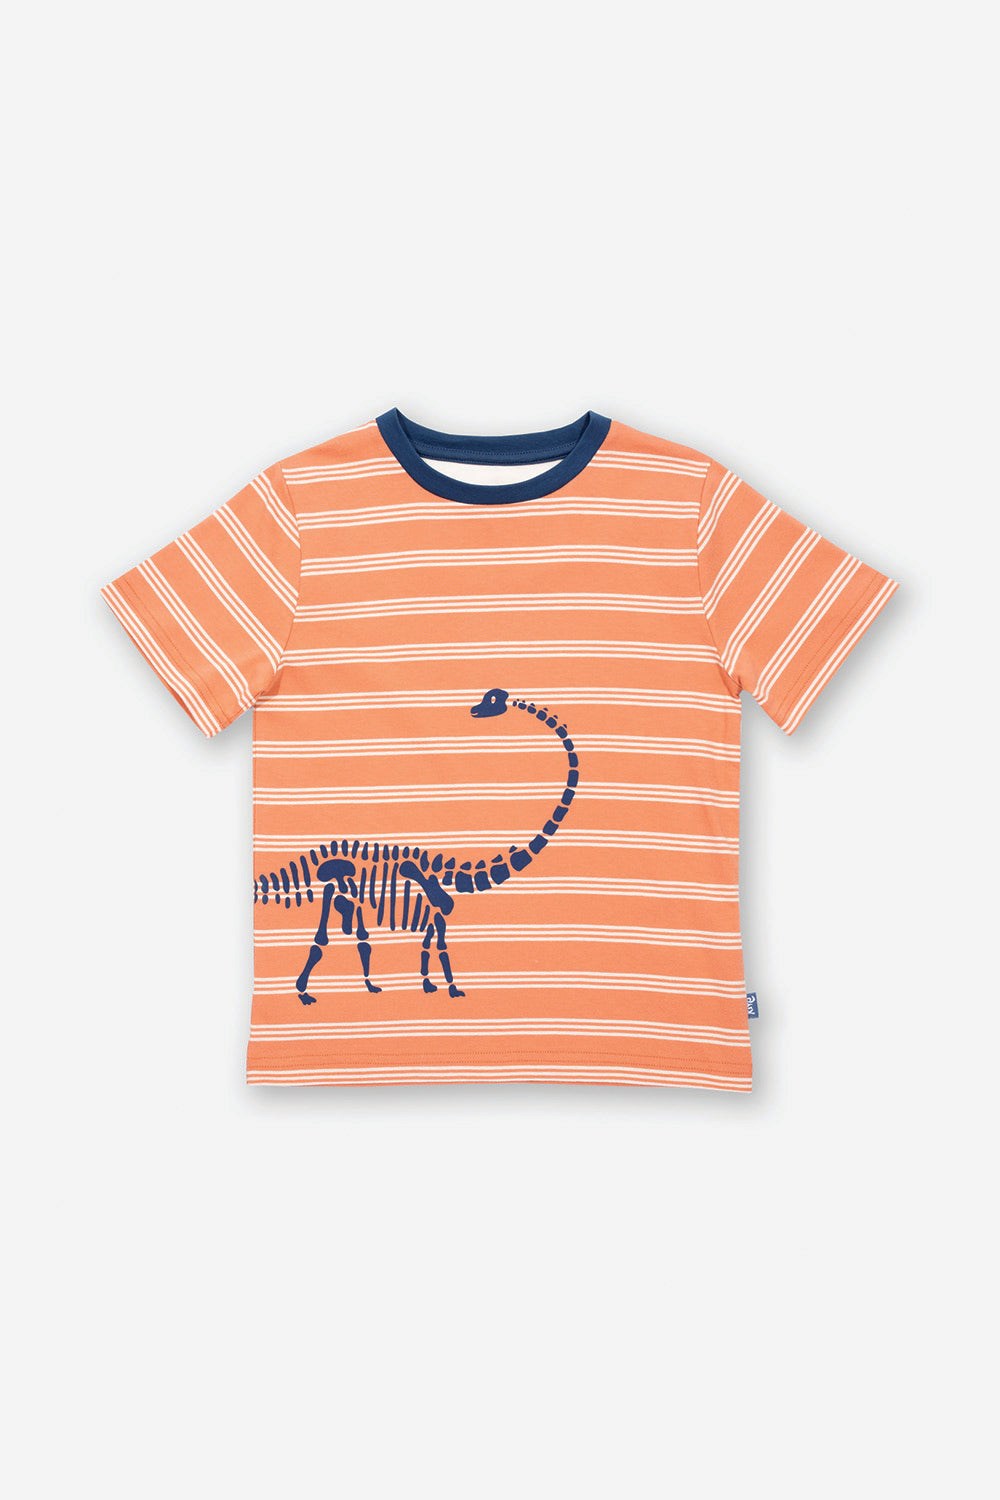 Dippy The Dino Baby/Kids Organic Cotton T-Shirt -